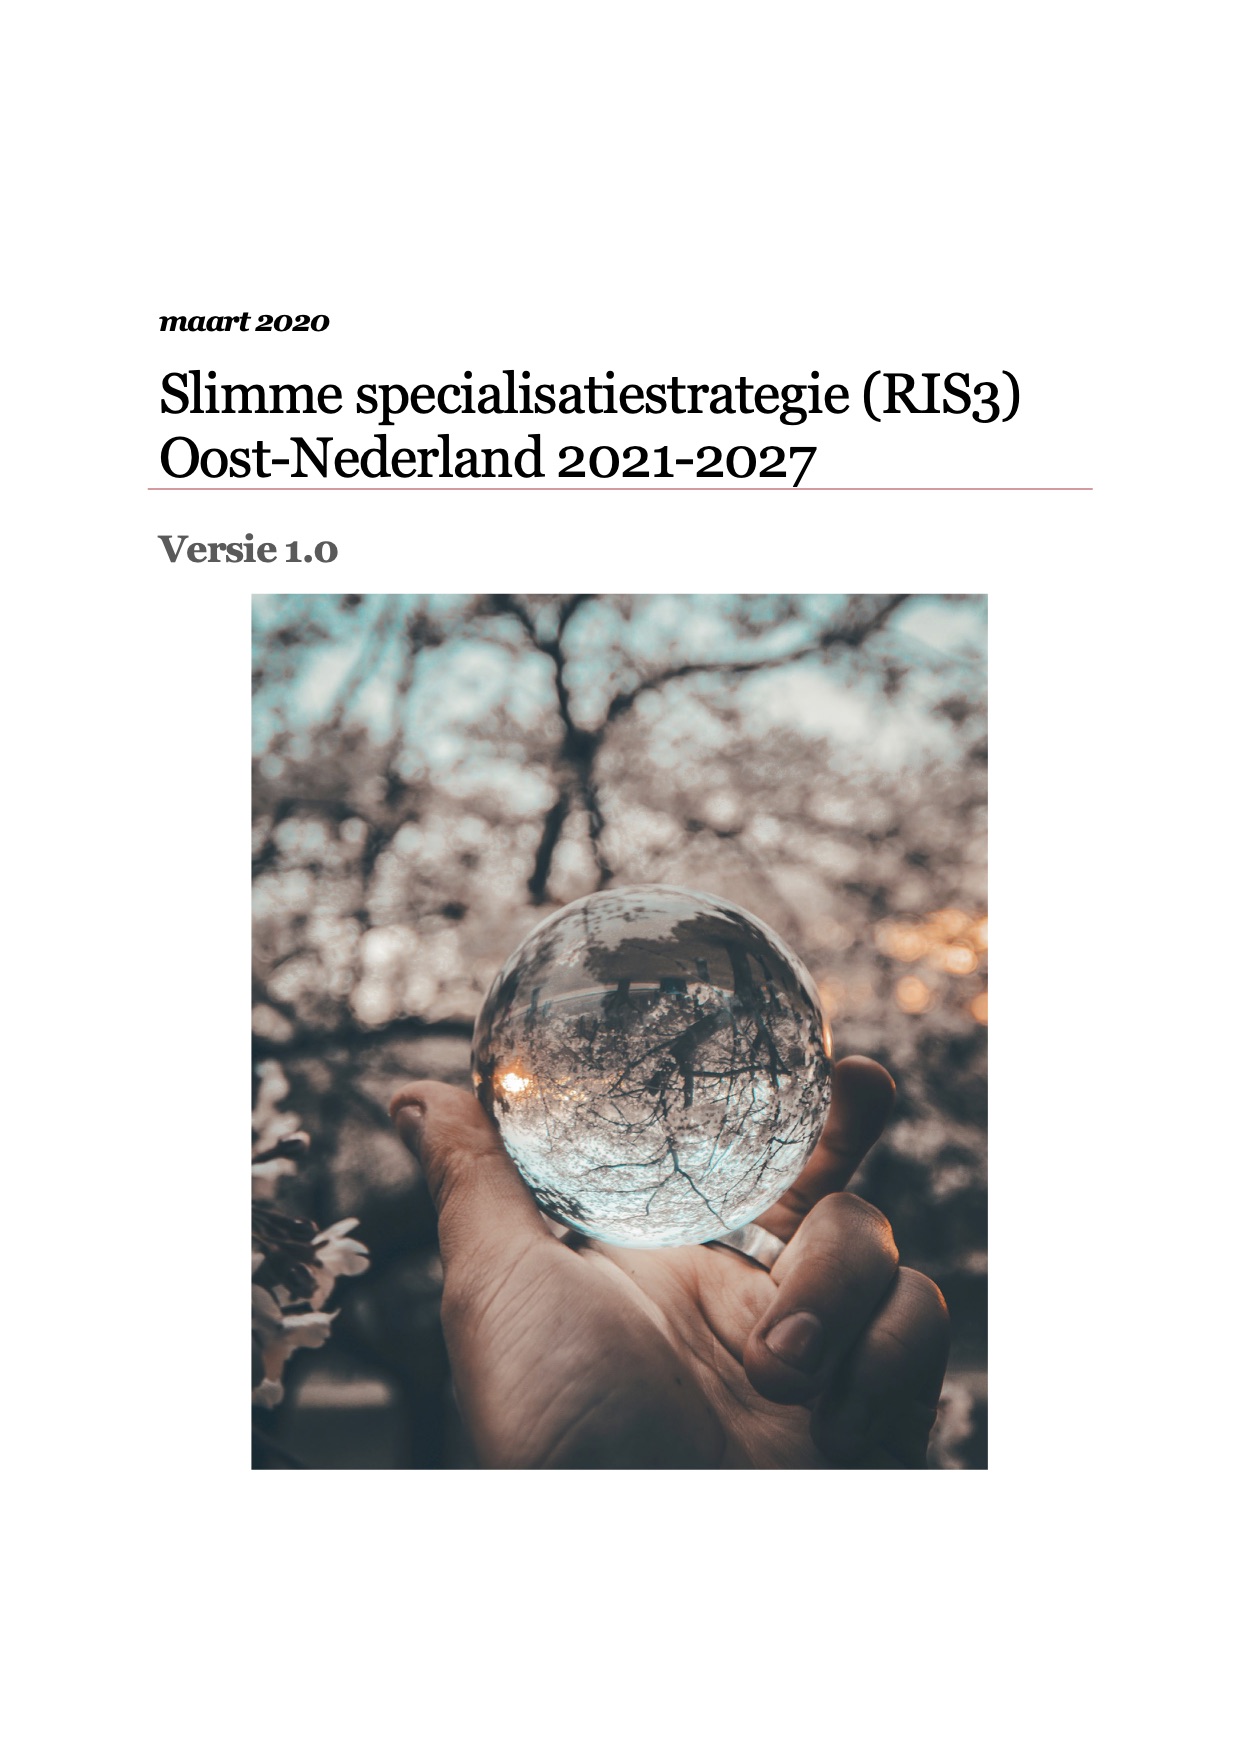 Smart specialisation strategy (RIS3) East-Netherlands 2021-2027